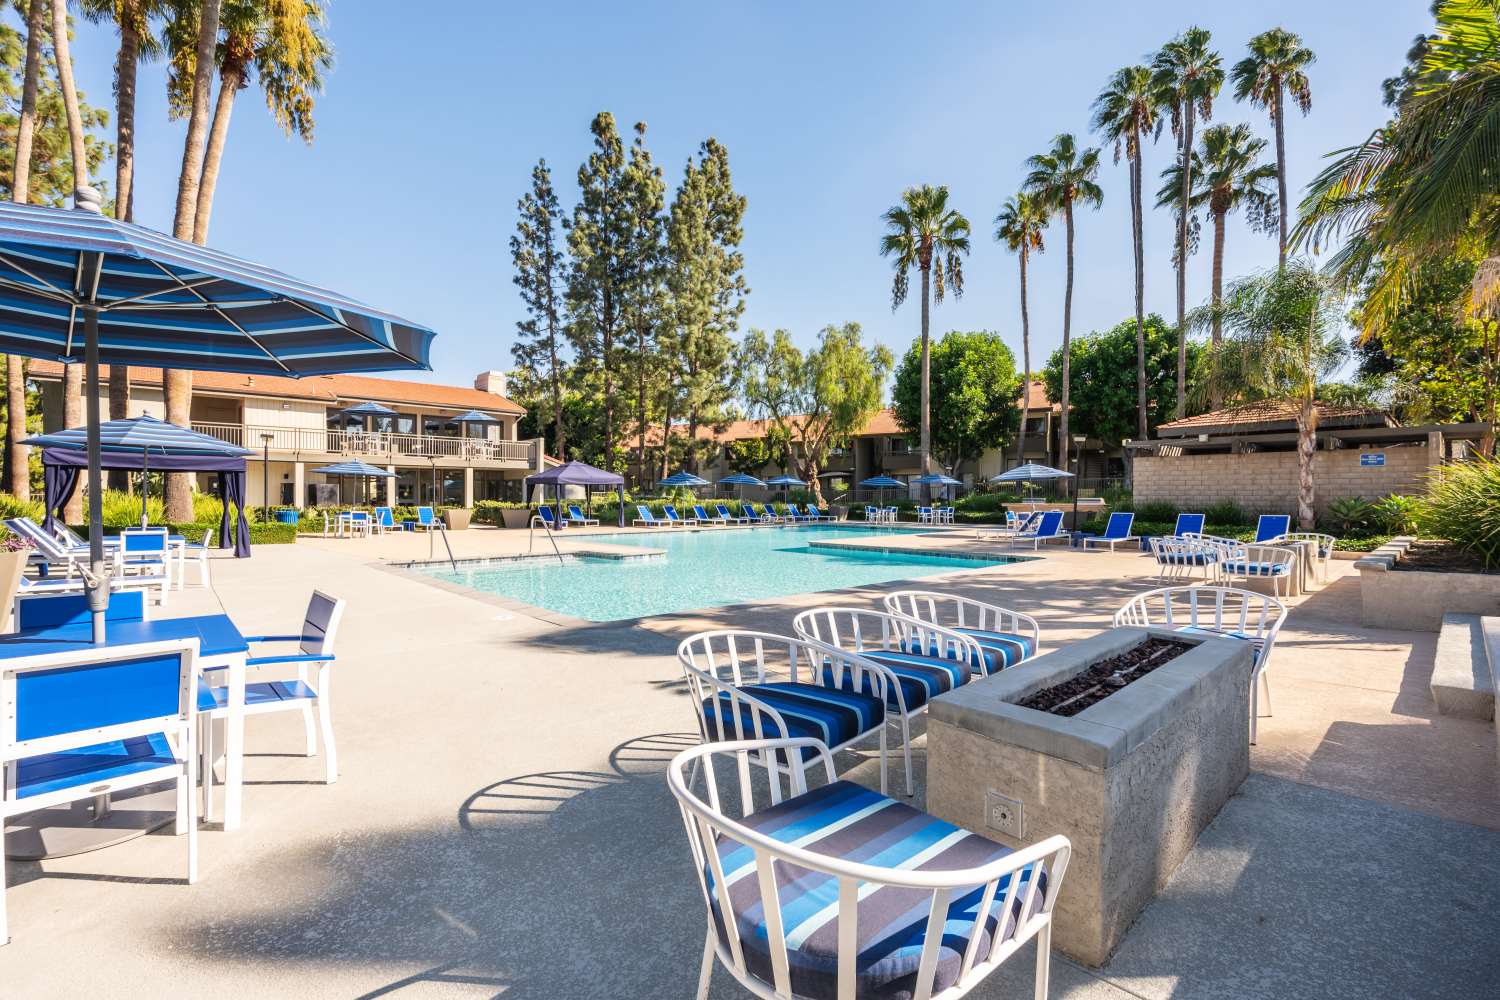 Enjoy a large swimming pool Parcwood Apartments in Corona, California